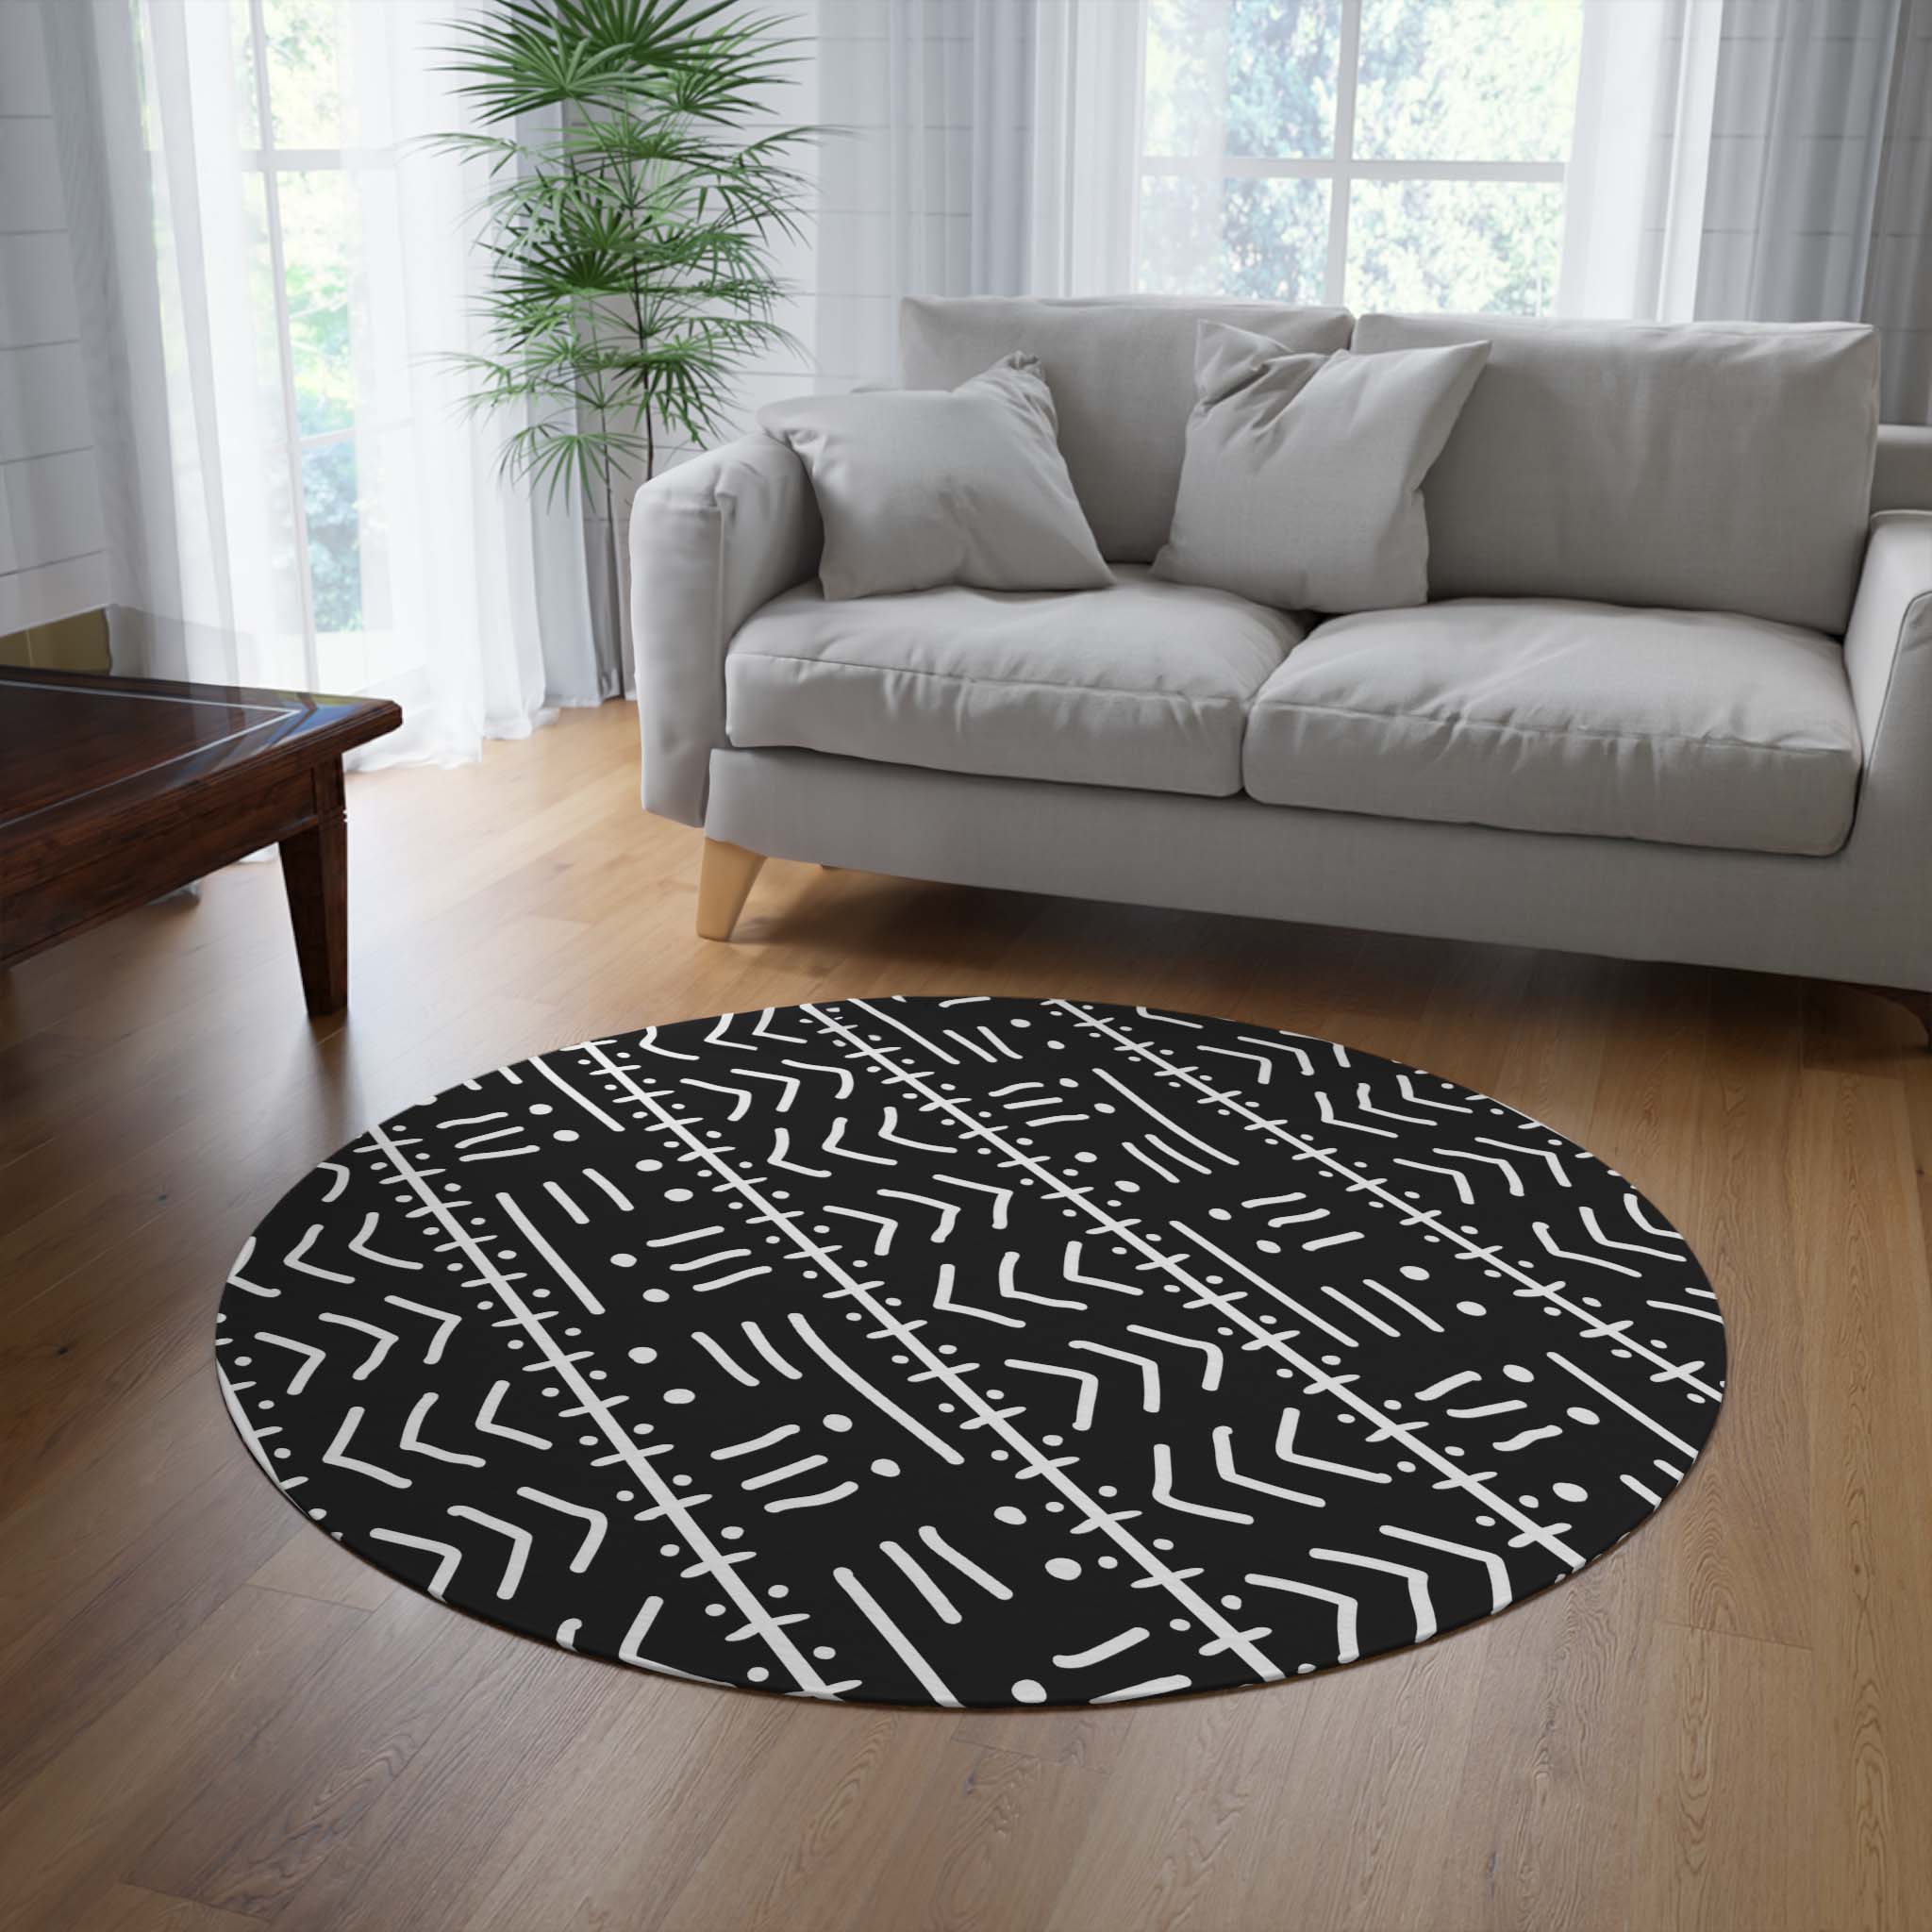 Round African Tribal Rug Black & White Carpet - Bynelo